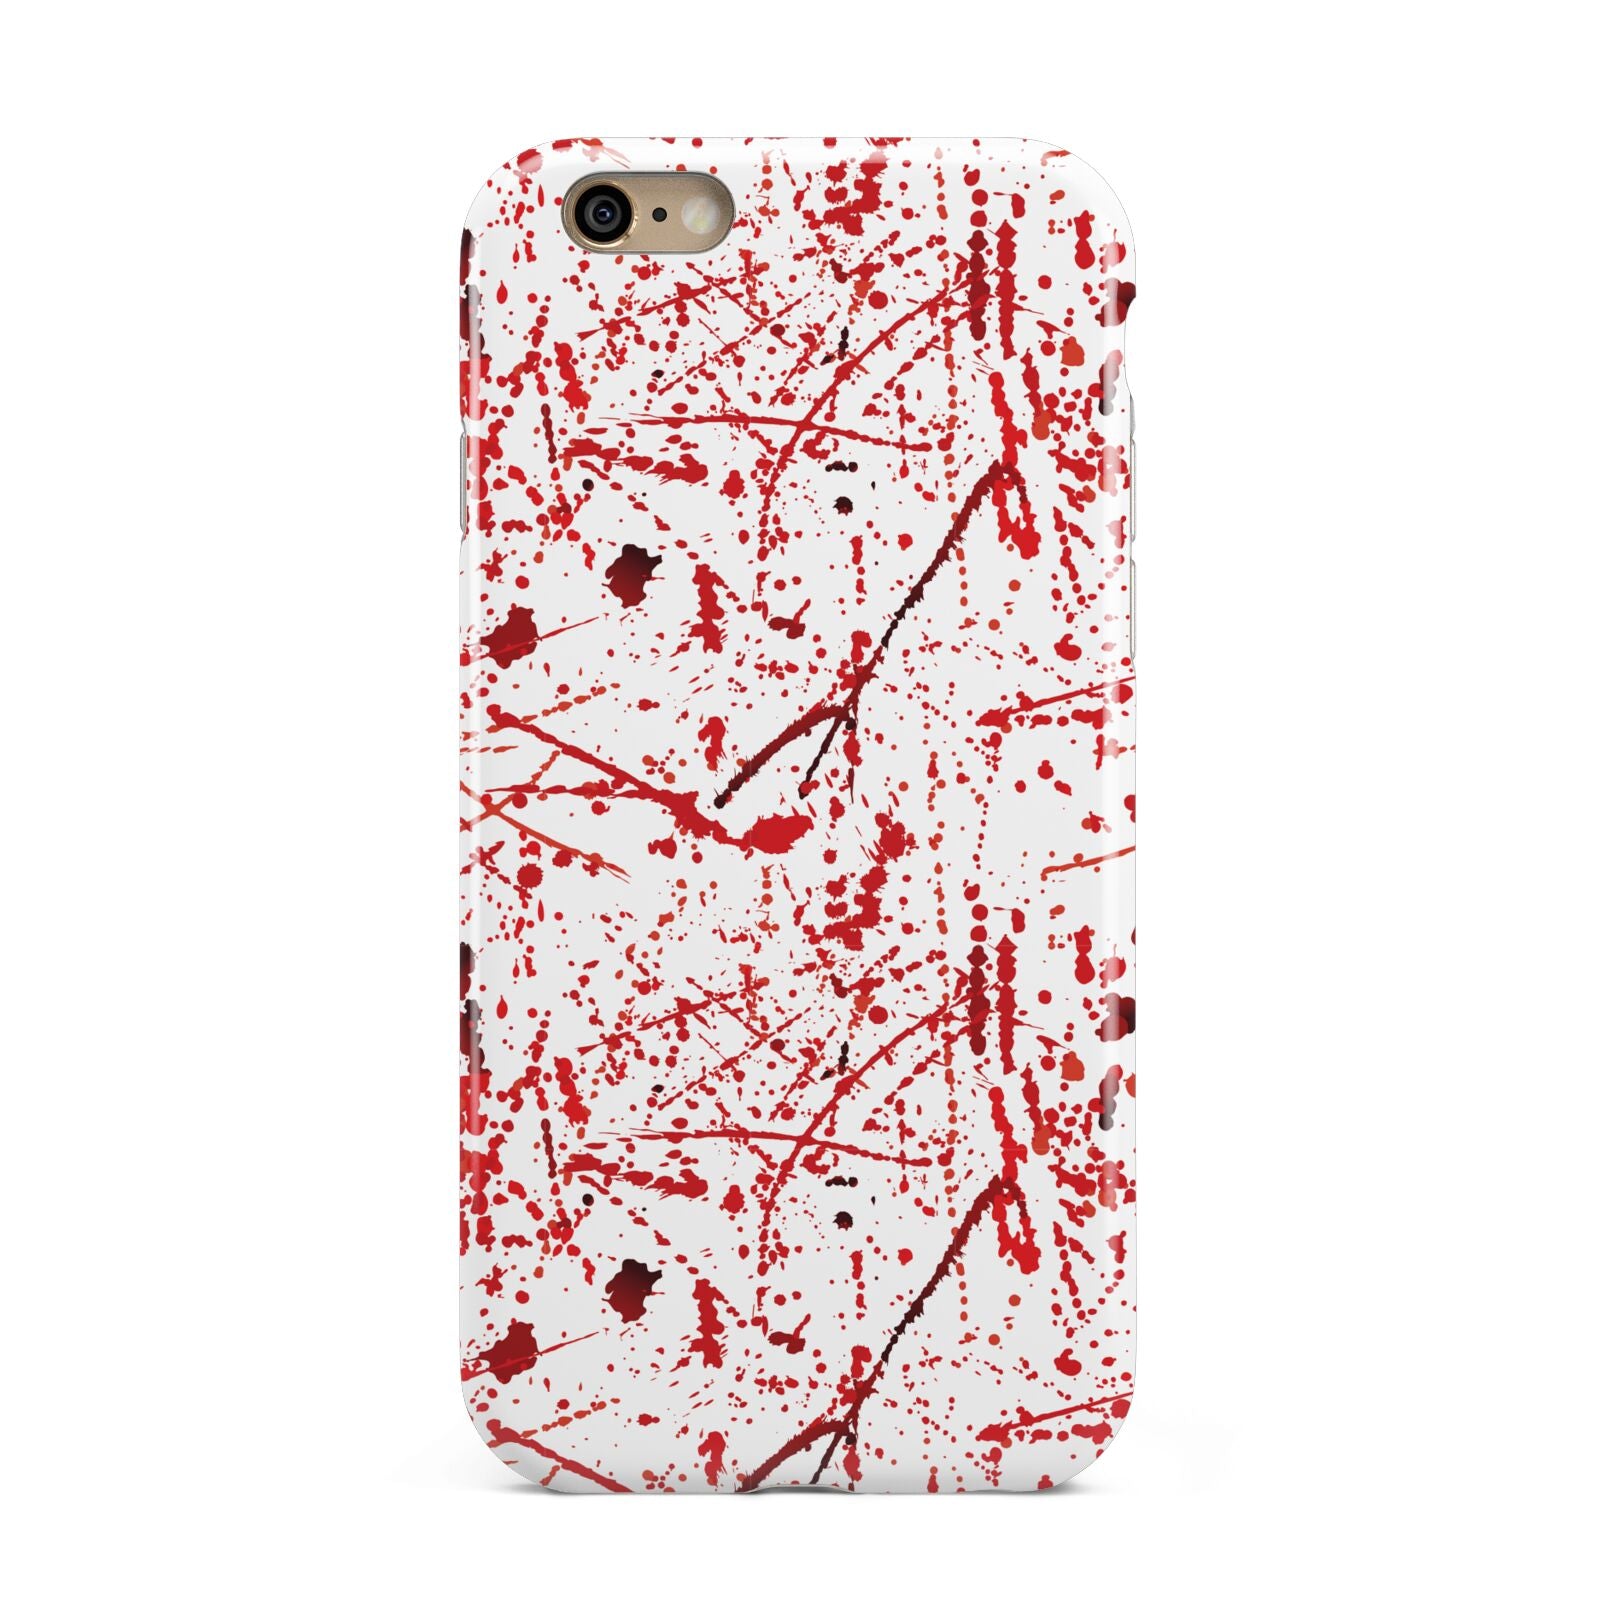 Blood Splatter Apple iPhone 6 3D Tough Case